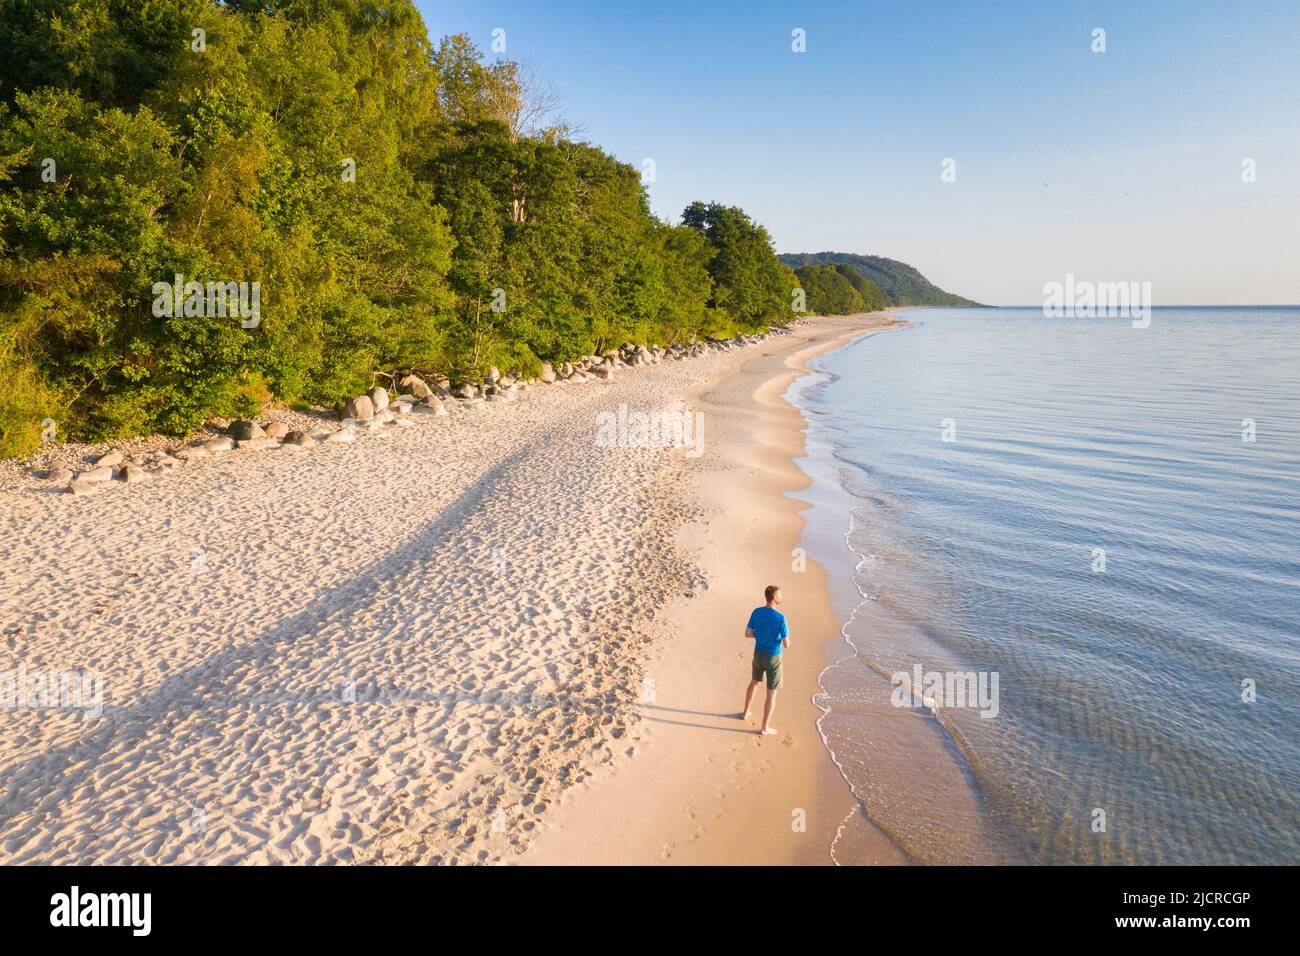 Man on sandy beach of the Baltic Sea near Knaebaeckshusen, Skane Province, Sweden Stock Photo